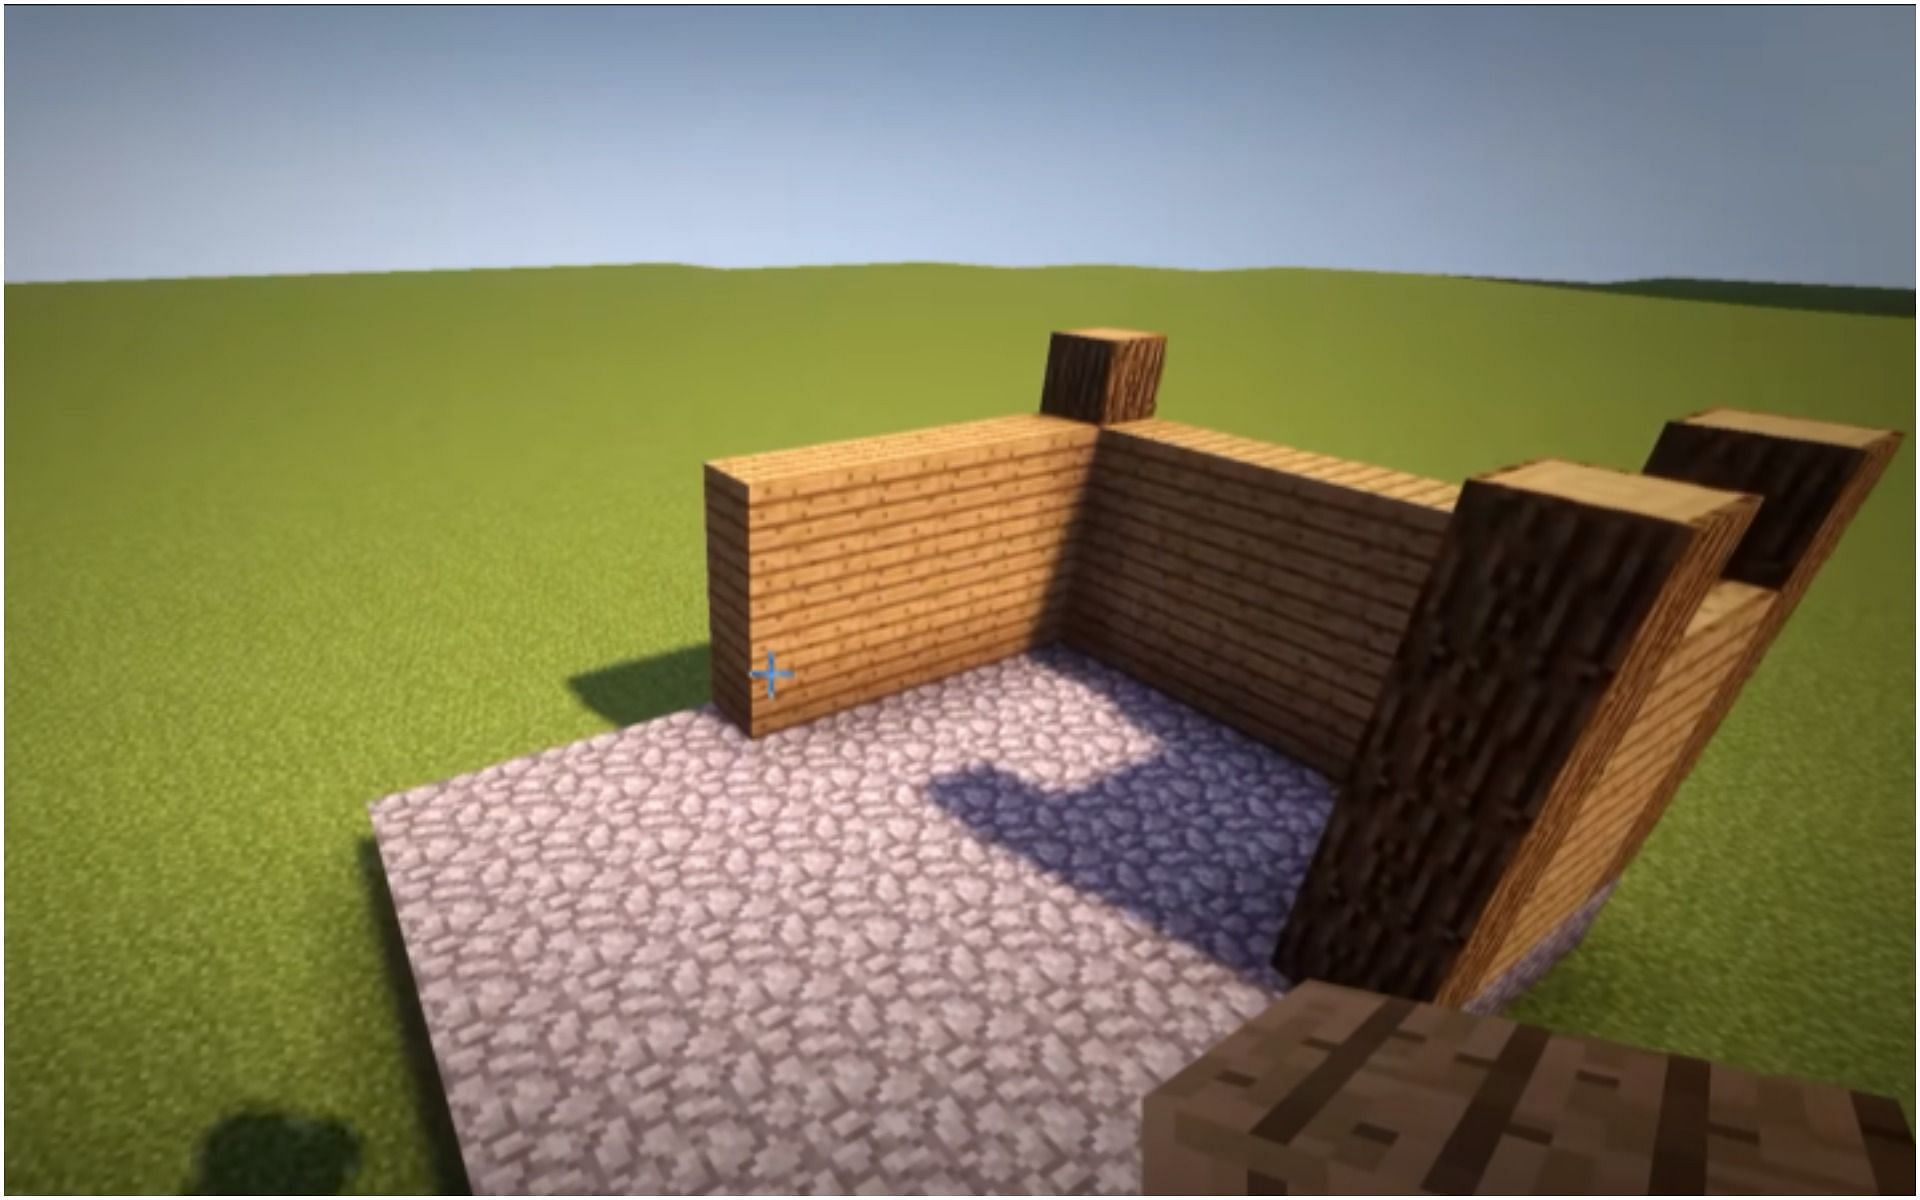 The back walls (Image via Minecraft)